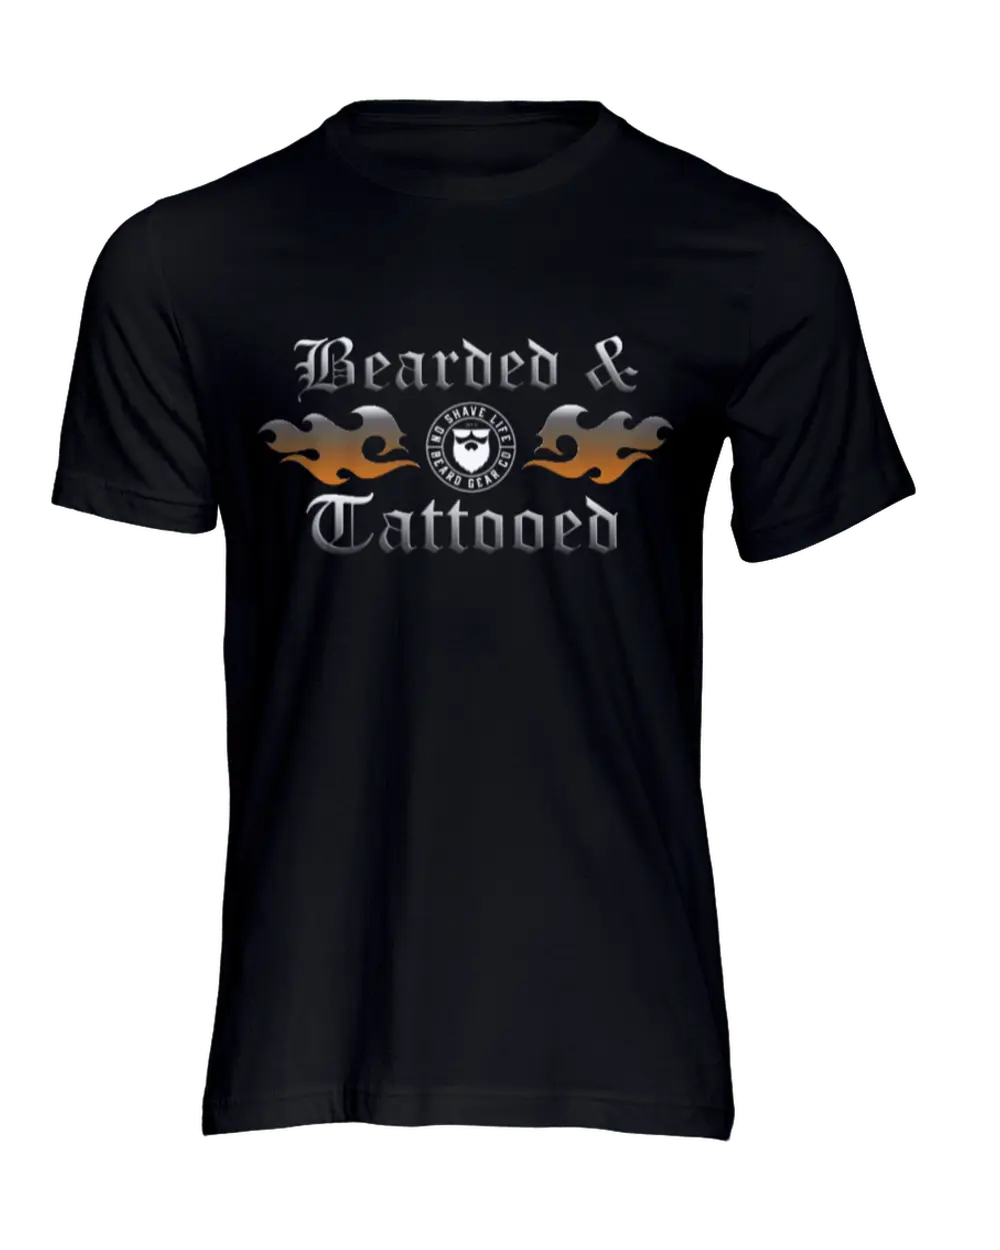 Bearded & Tattooed Black Men's T-Shirt|T-Shirt